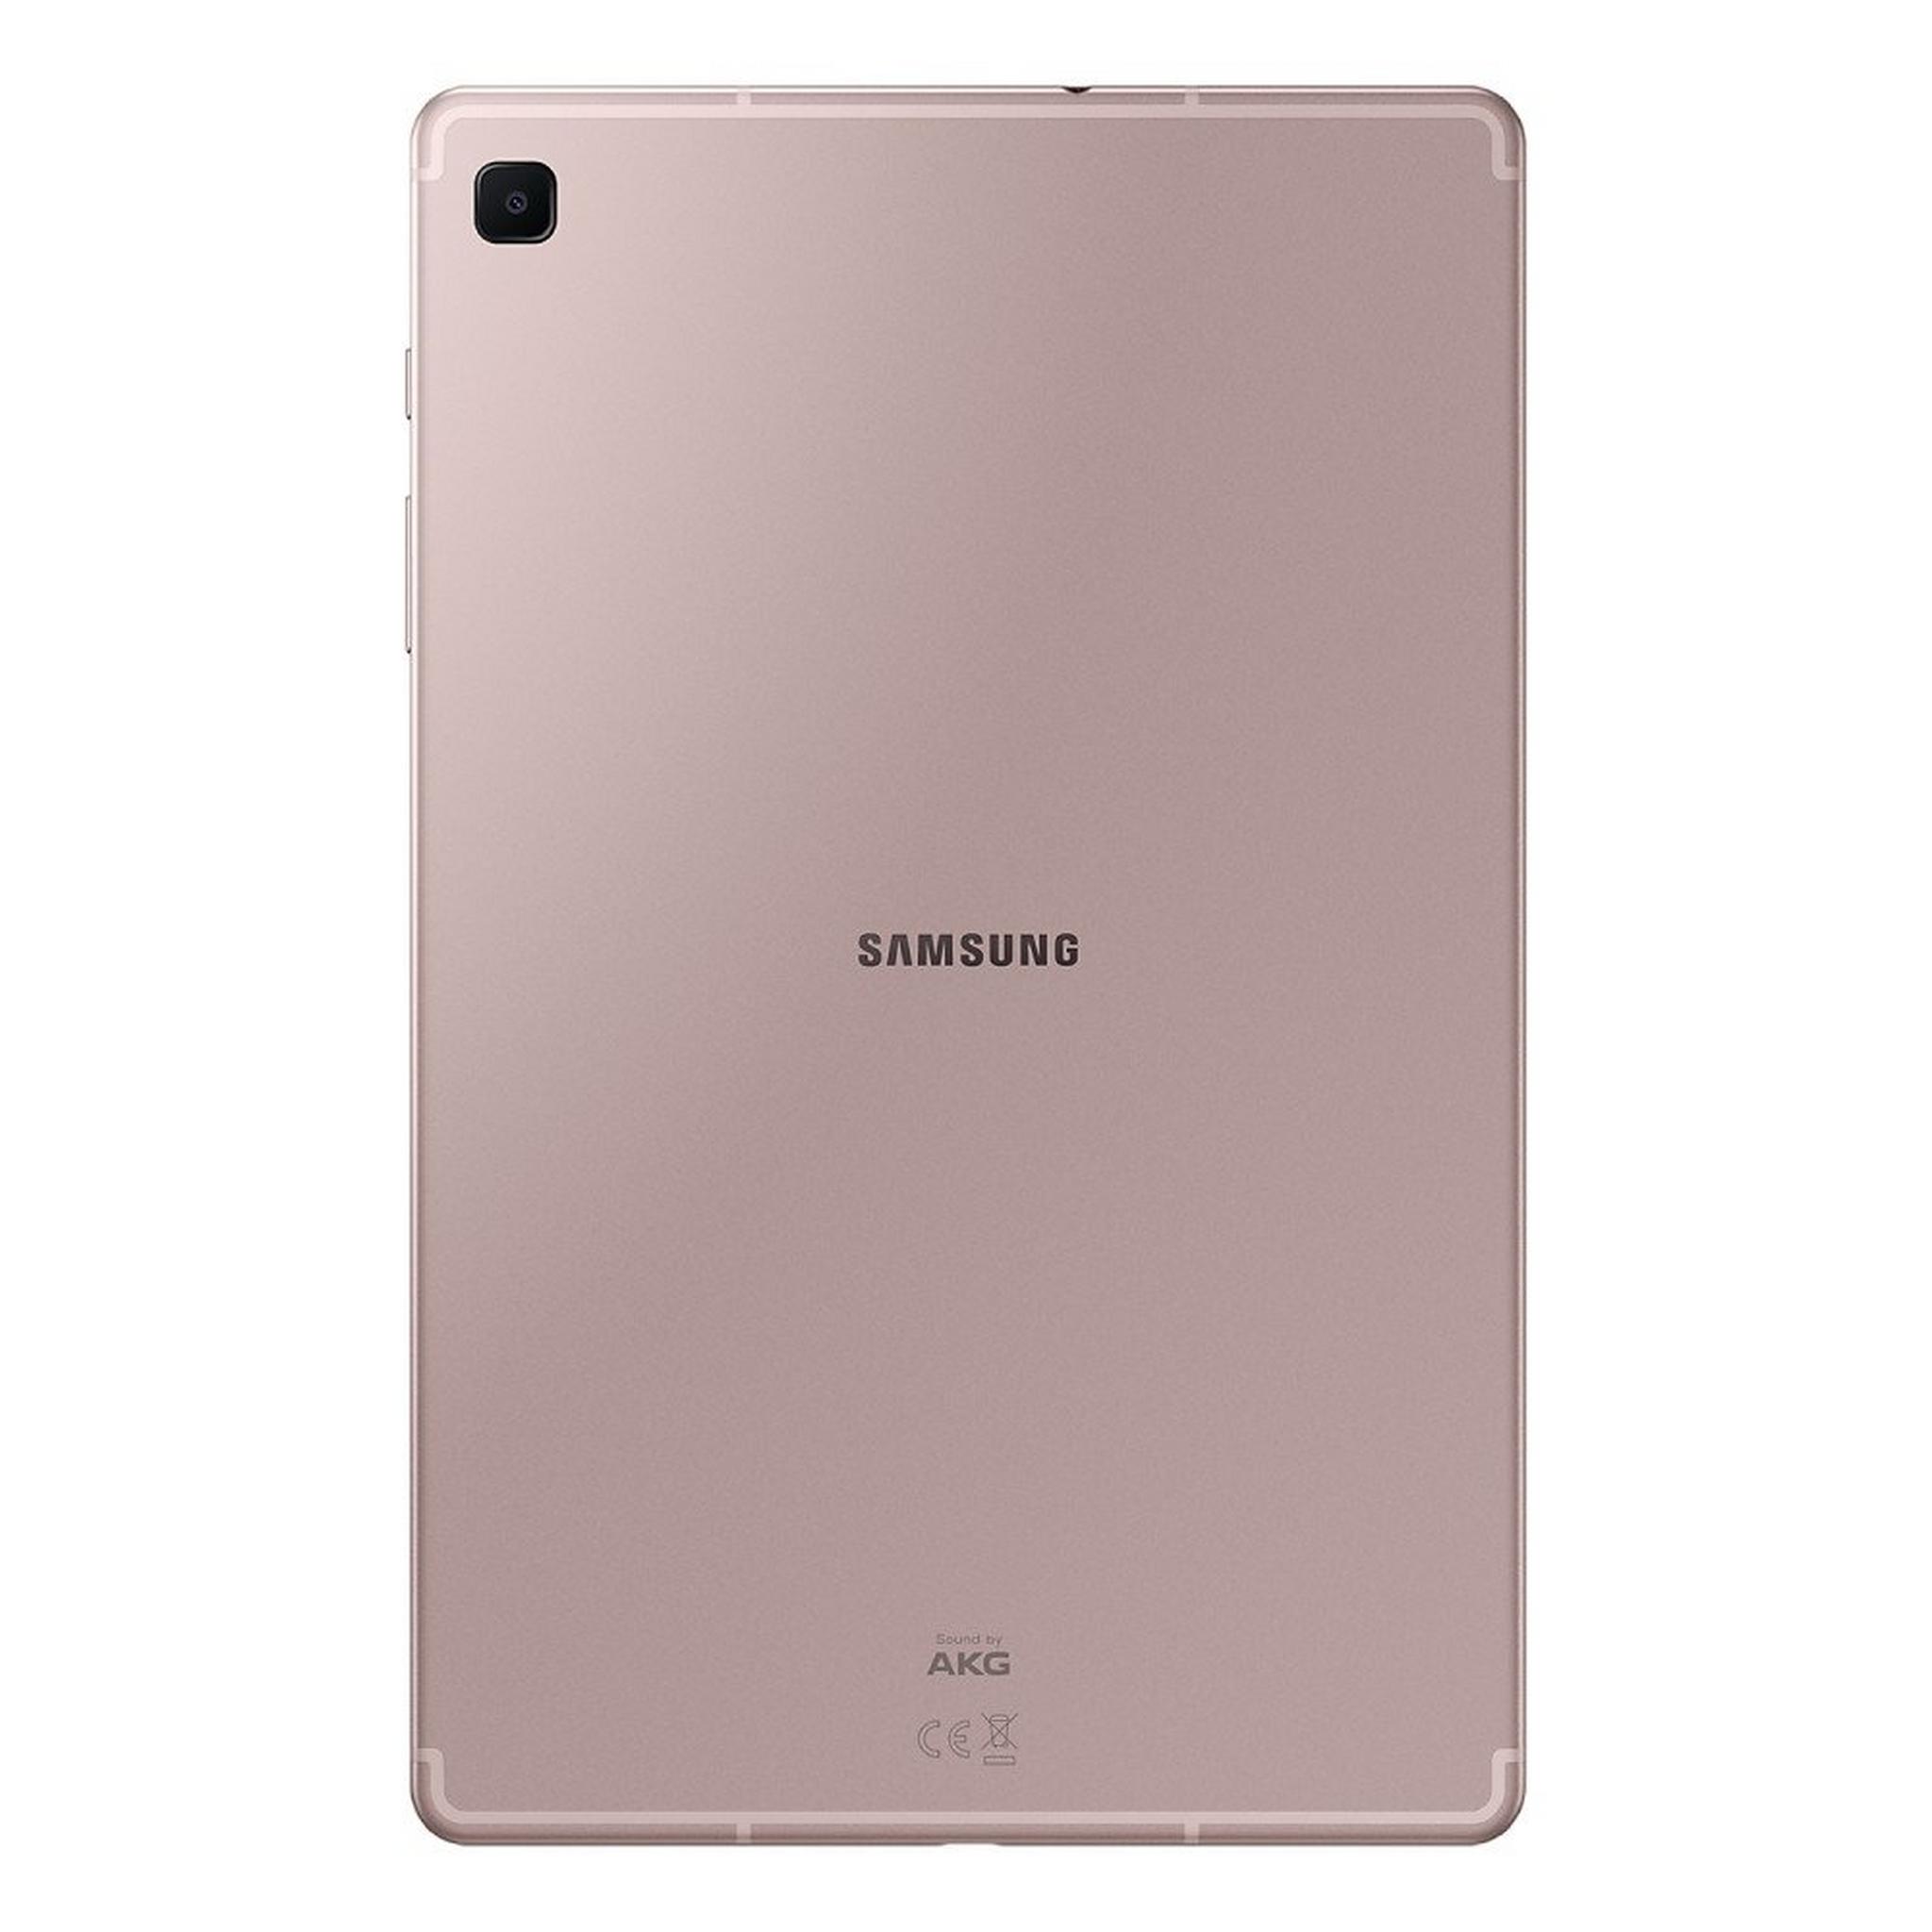 Samsung Galaxy TAB S6 Lite (2022) 64GB, 10.4-inch 4G Tablet - Pink